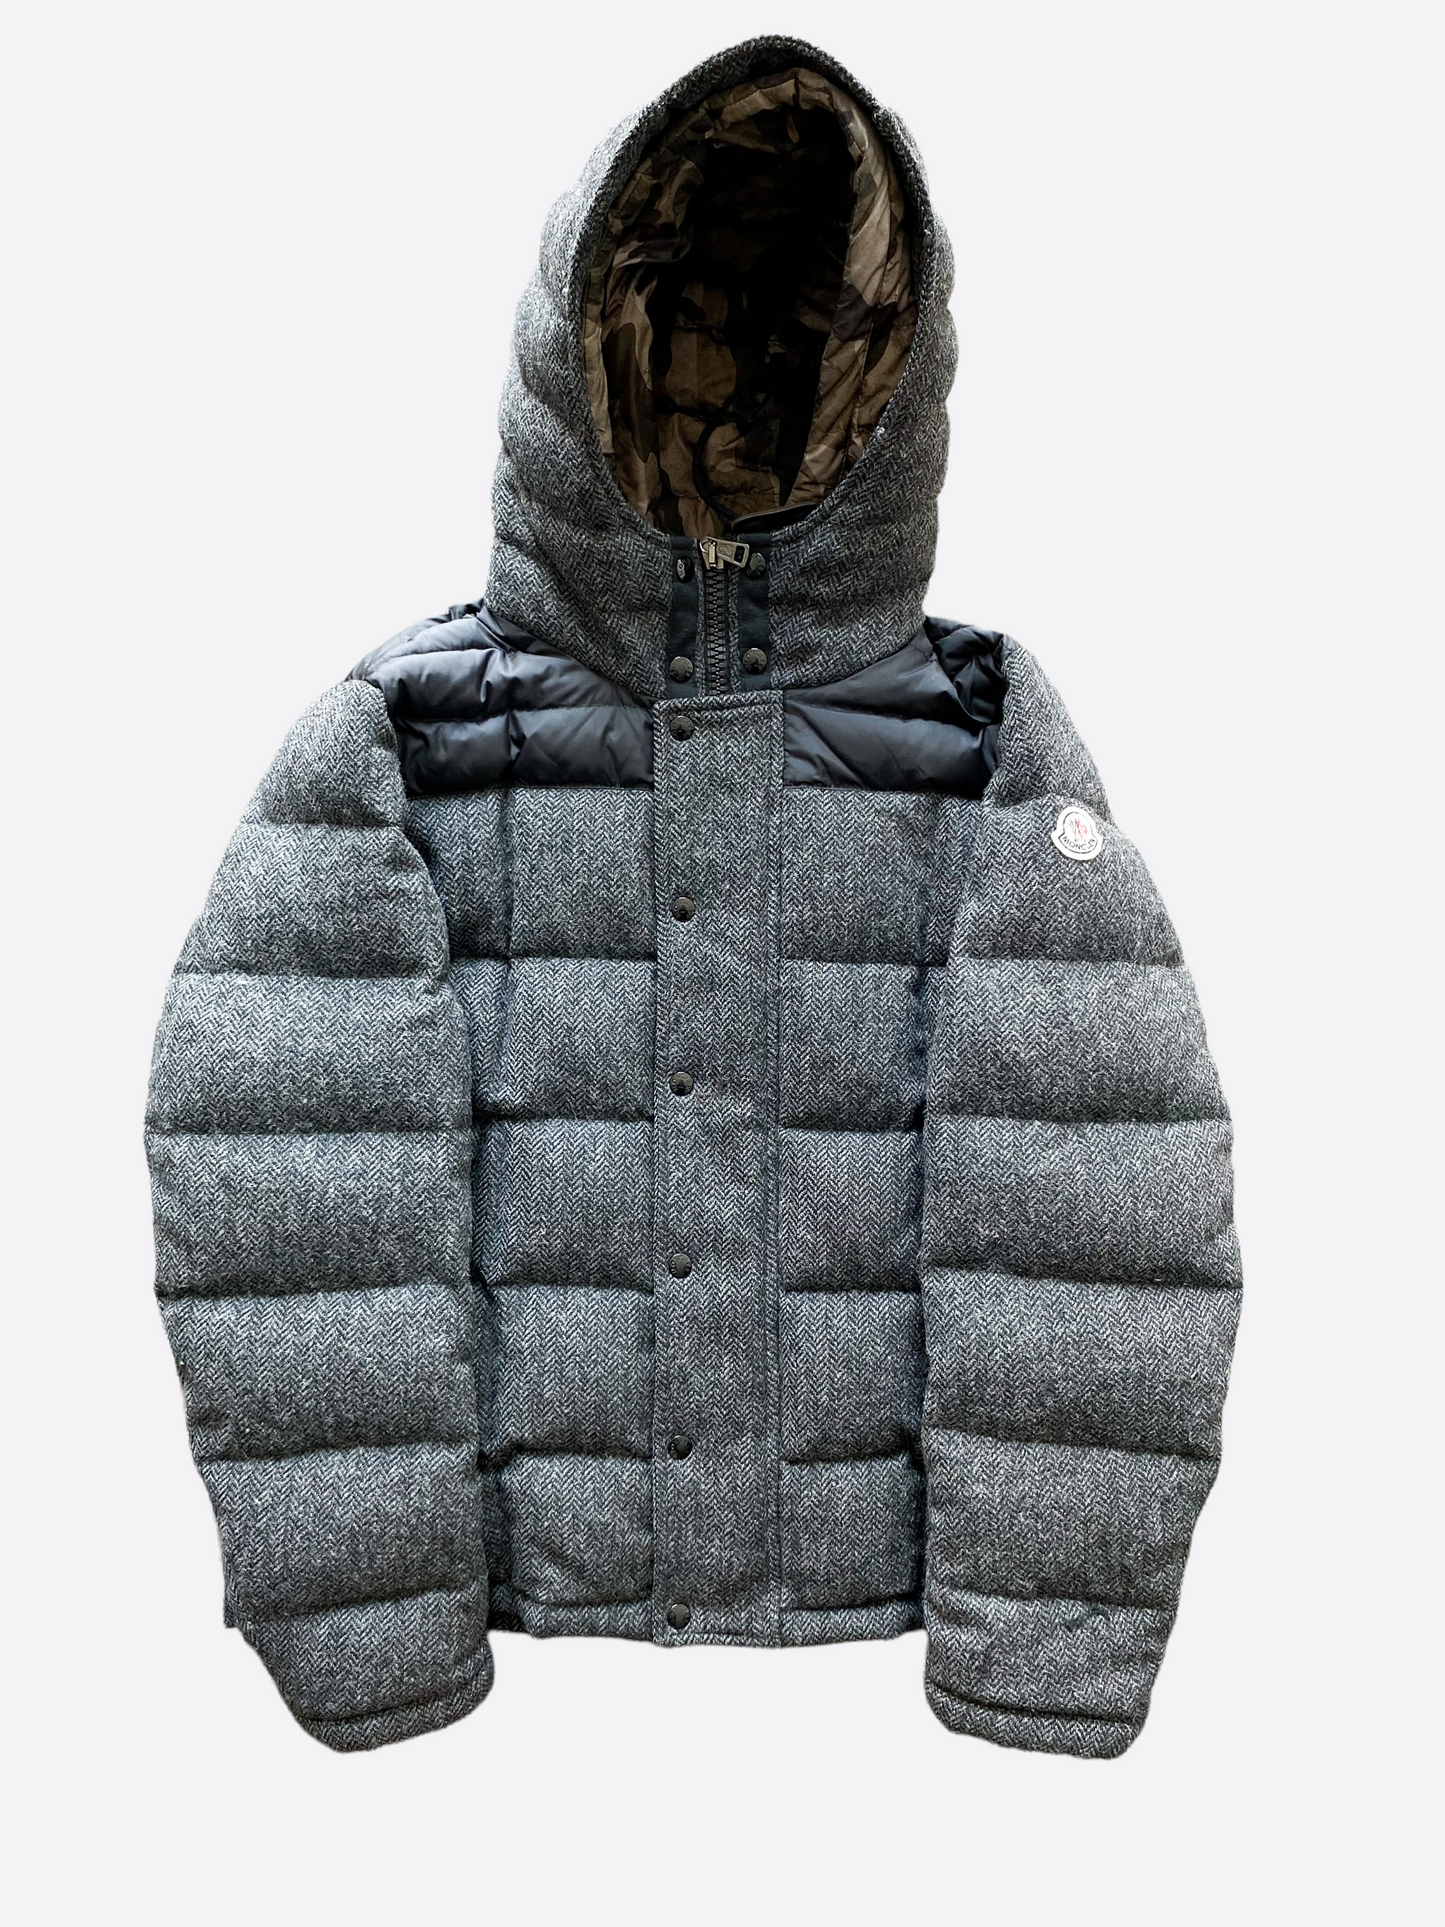 Moncler mens winter jacket Size 7